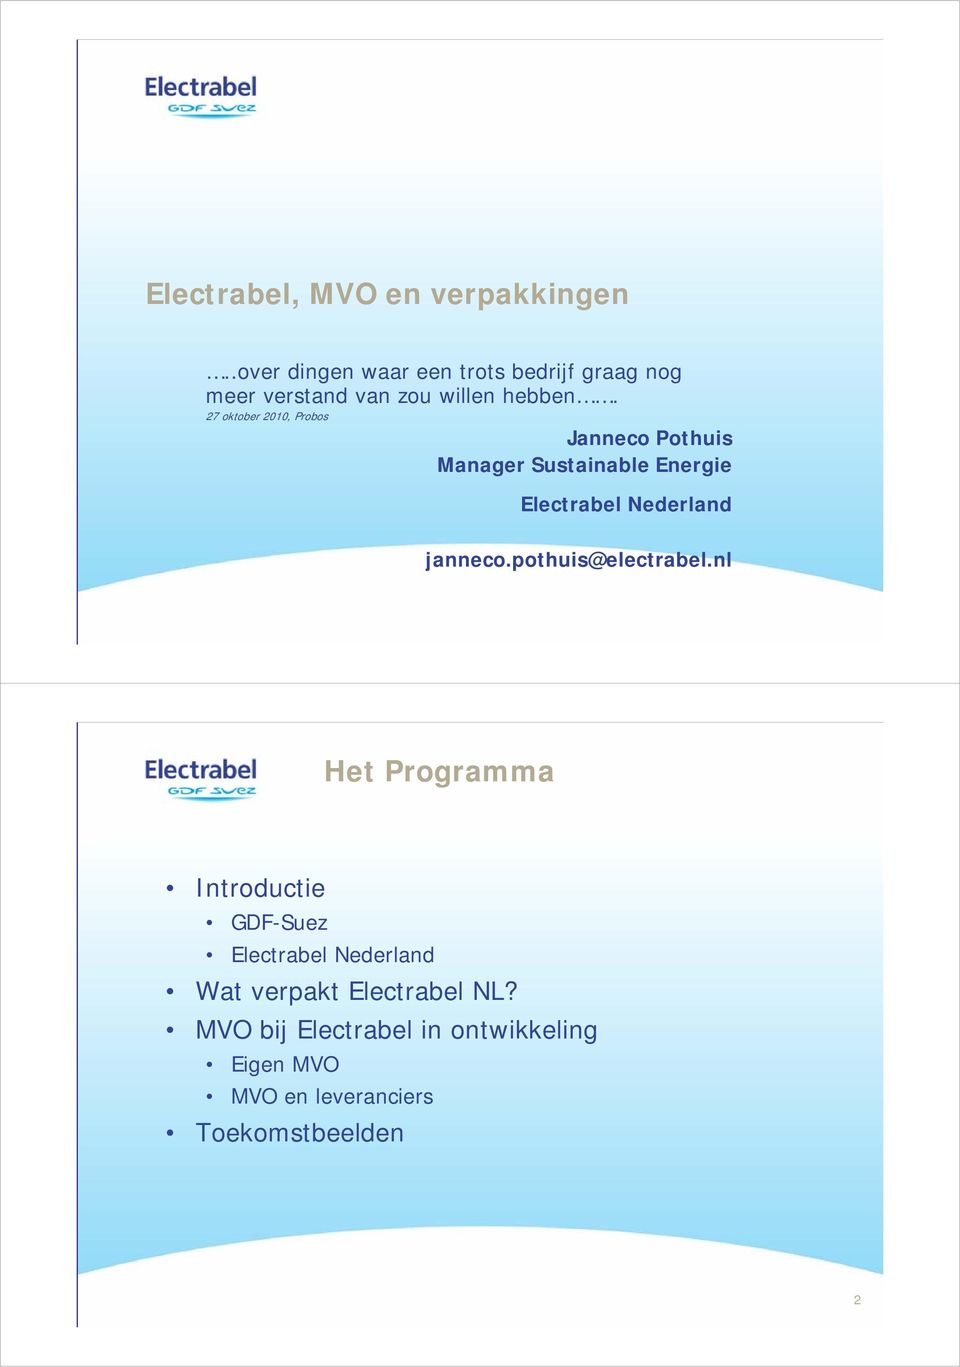 27 oktober 2010, Probos Janneco Pothuis Manager Sustainable Energie Electrabel Nederland janneco.